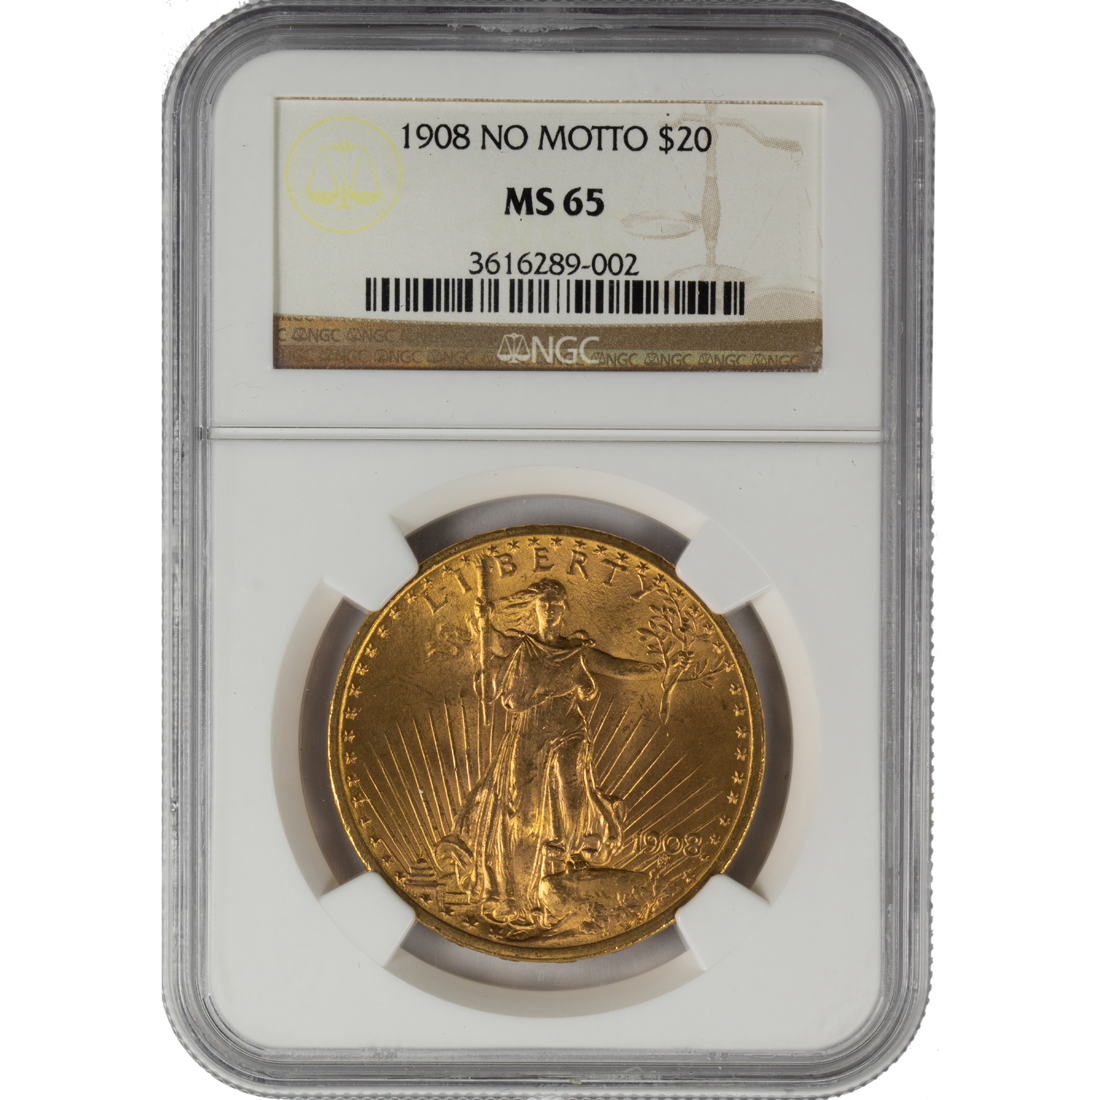 1908 NO MOTTO $20 GOLD ST 1908